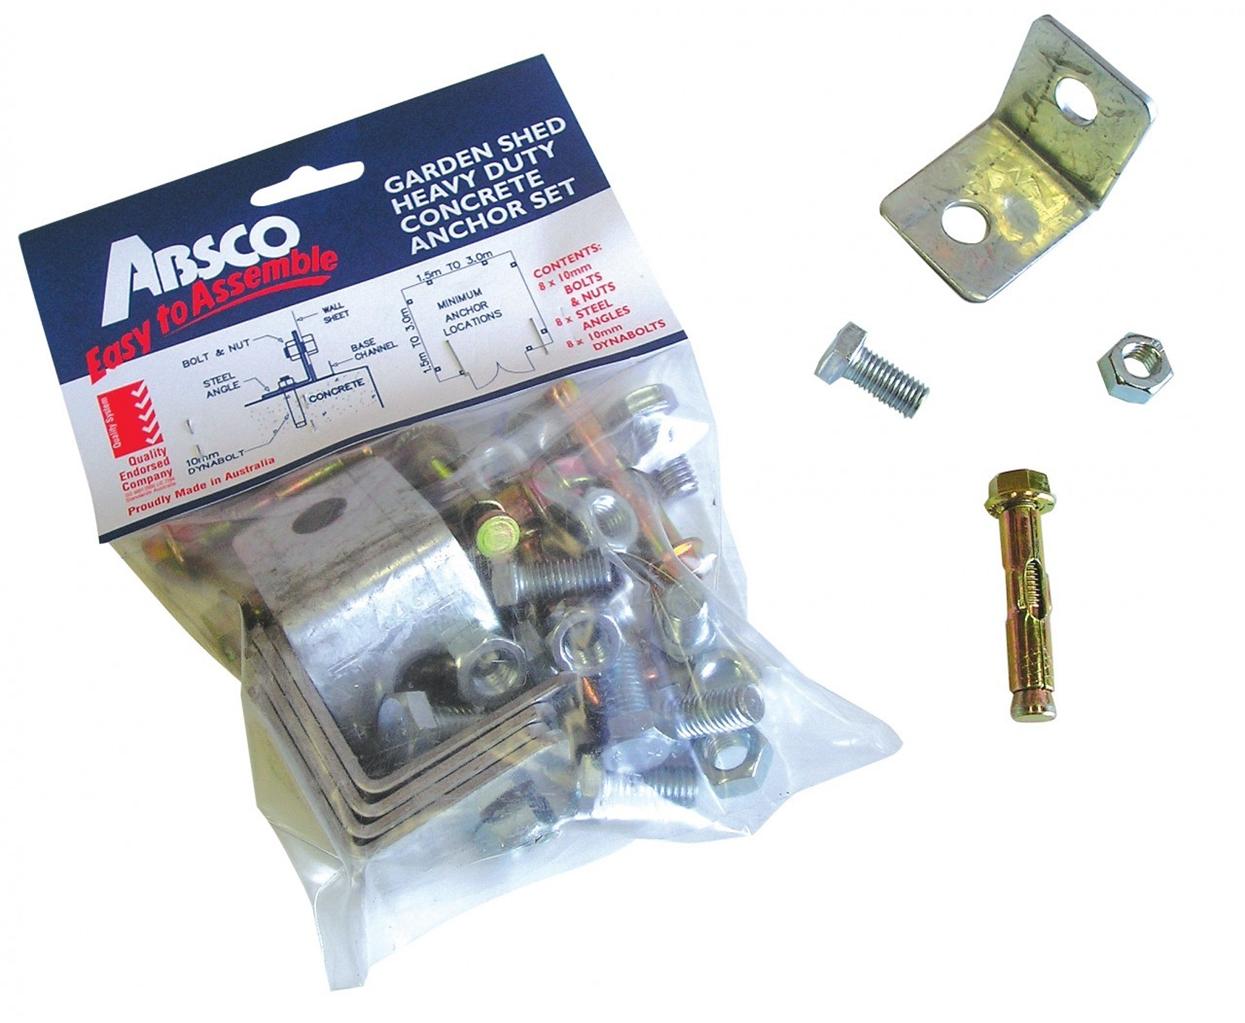 ABSCO Garden Shed Concrete Anchor Kit Set Of 8 | eBay